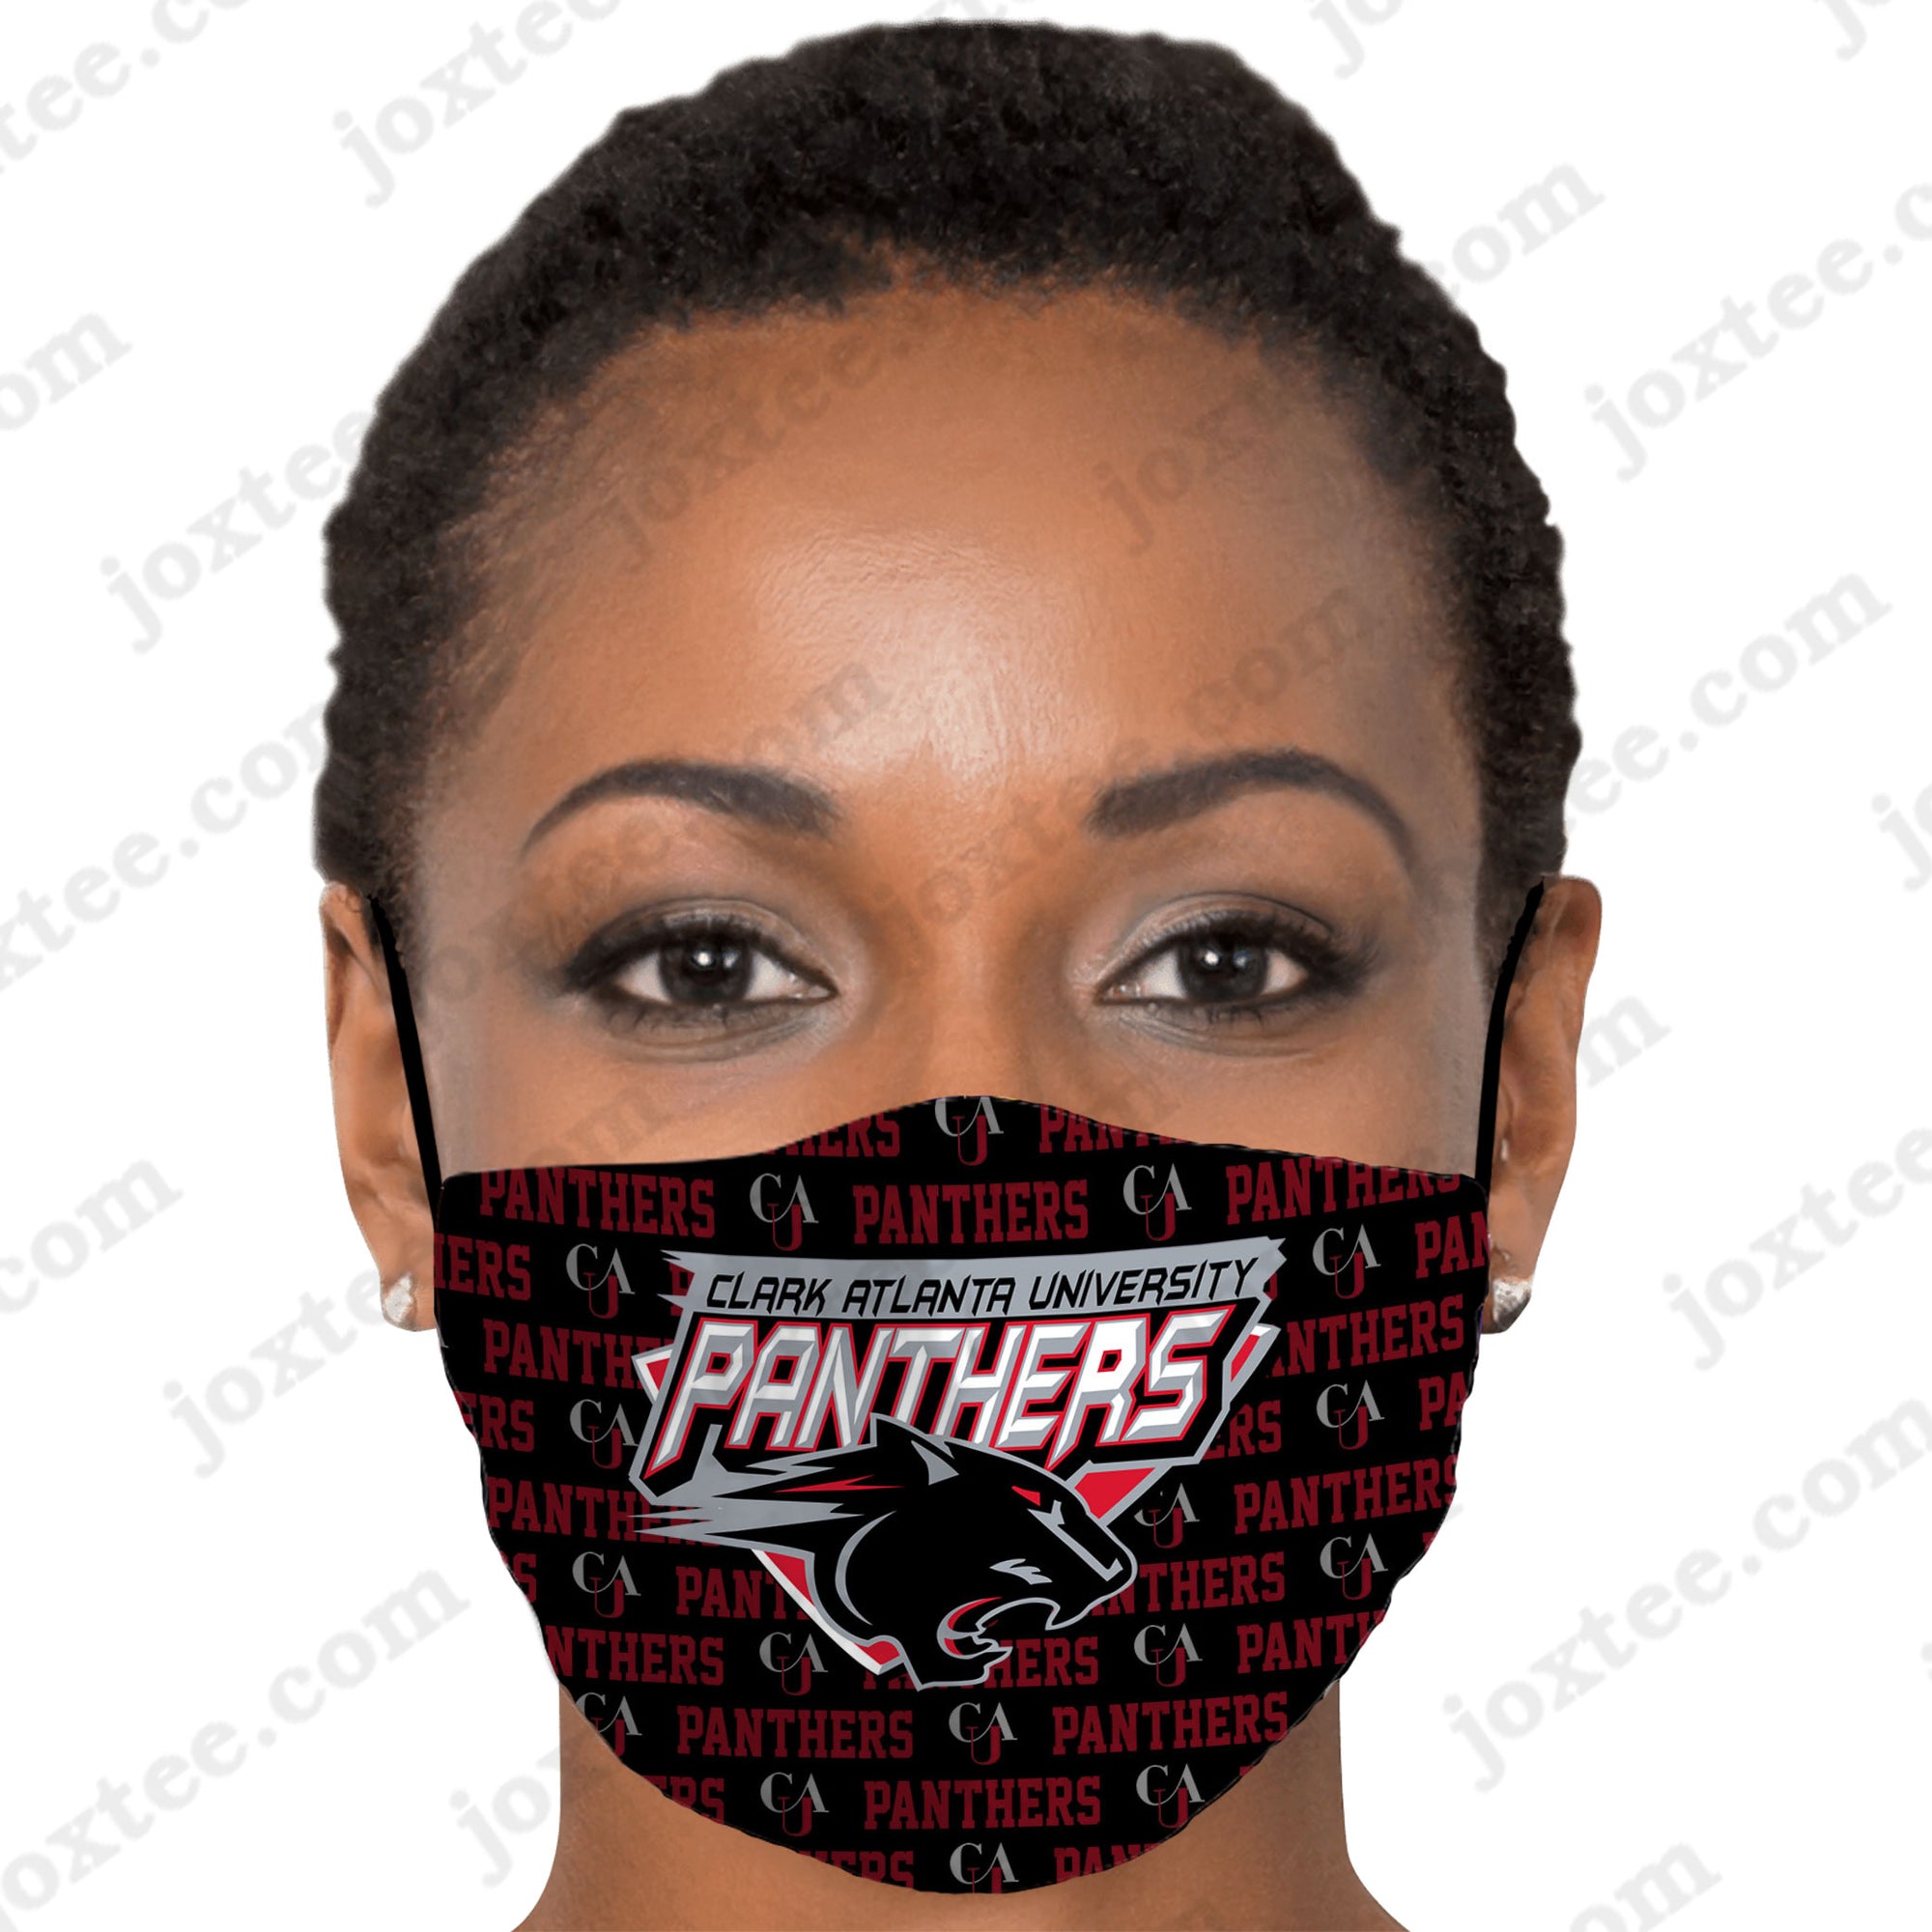 Cau Panthers Fashion Mask 3D v26